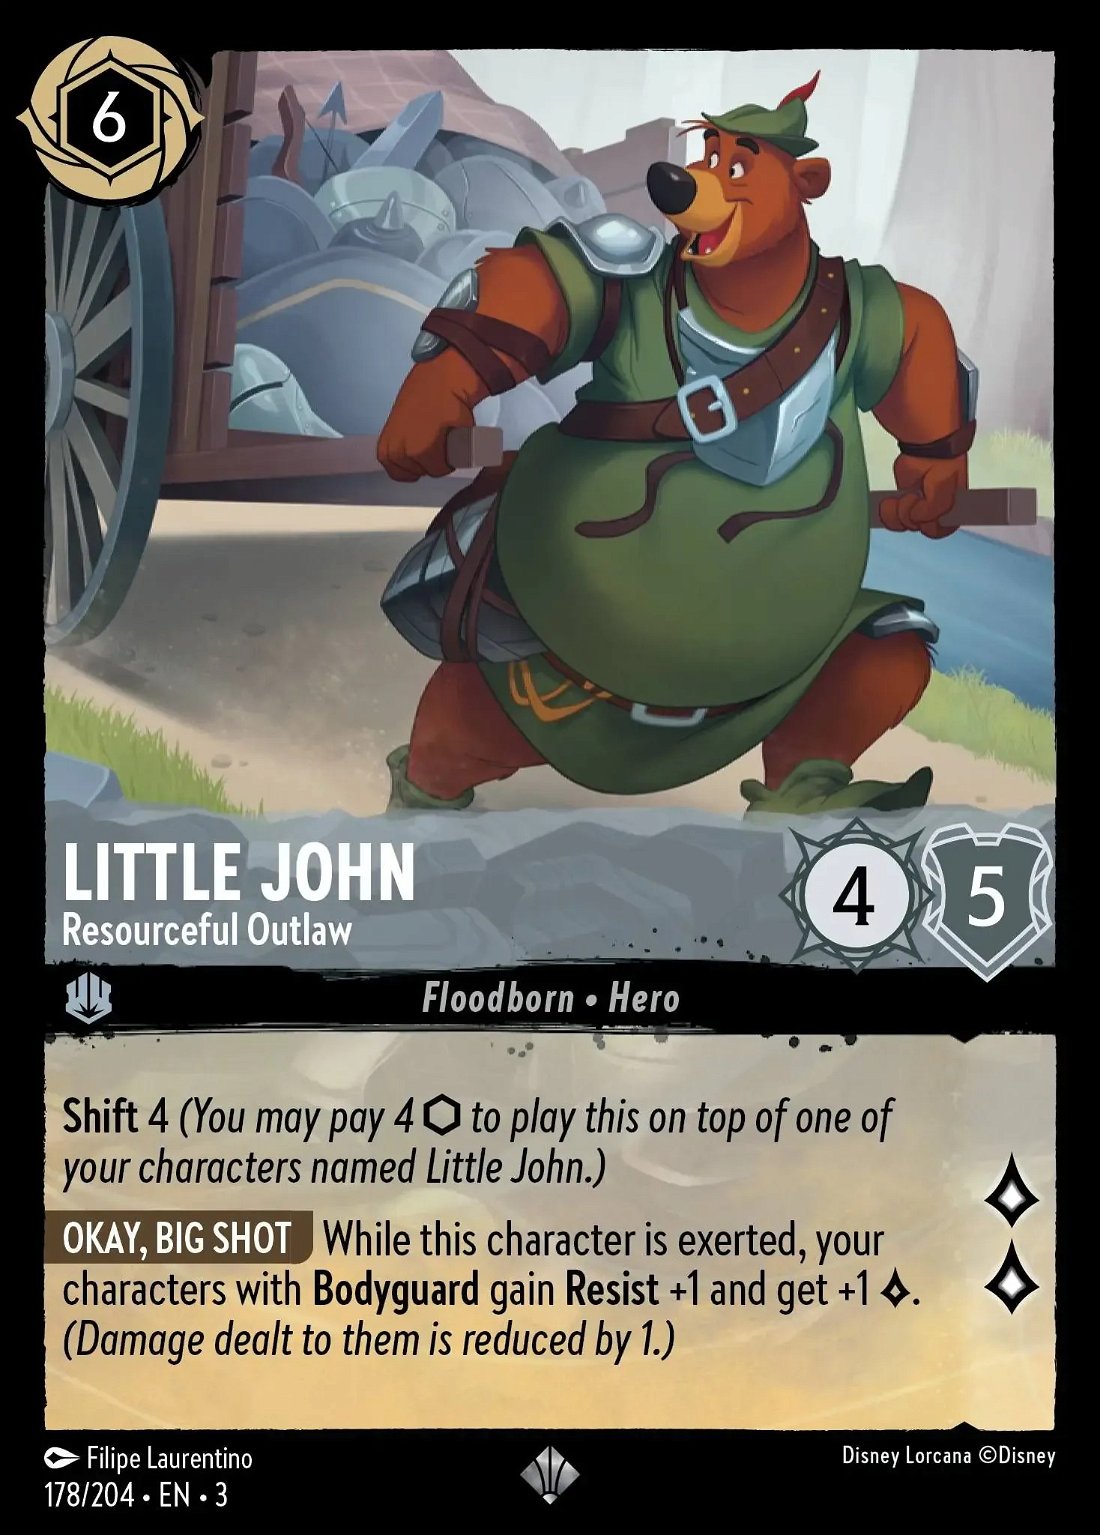 Little John - Resourceful Outlaw Crop image Wallpaper